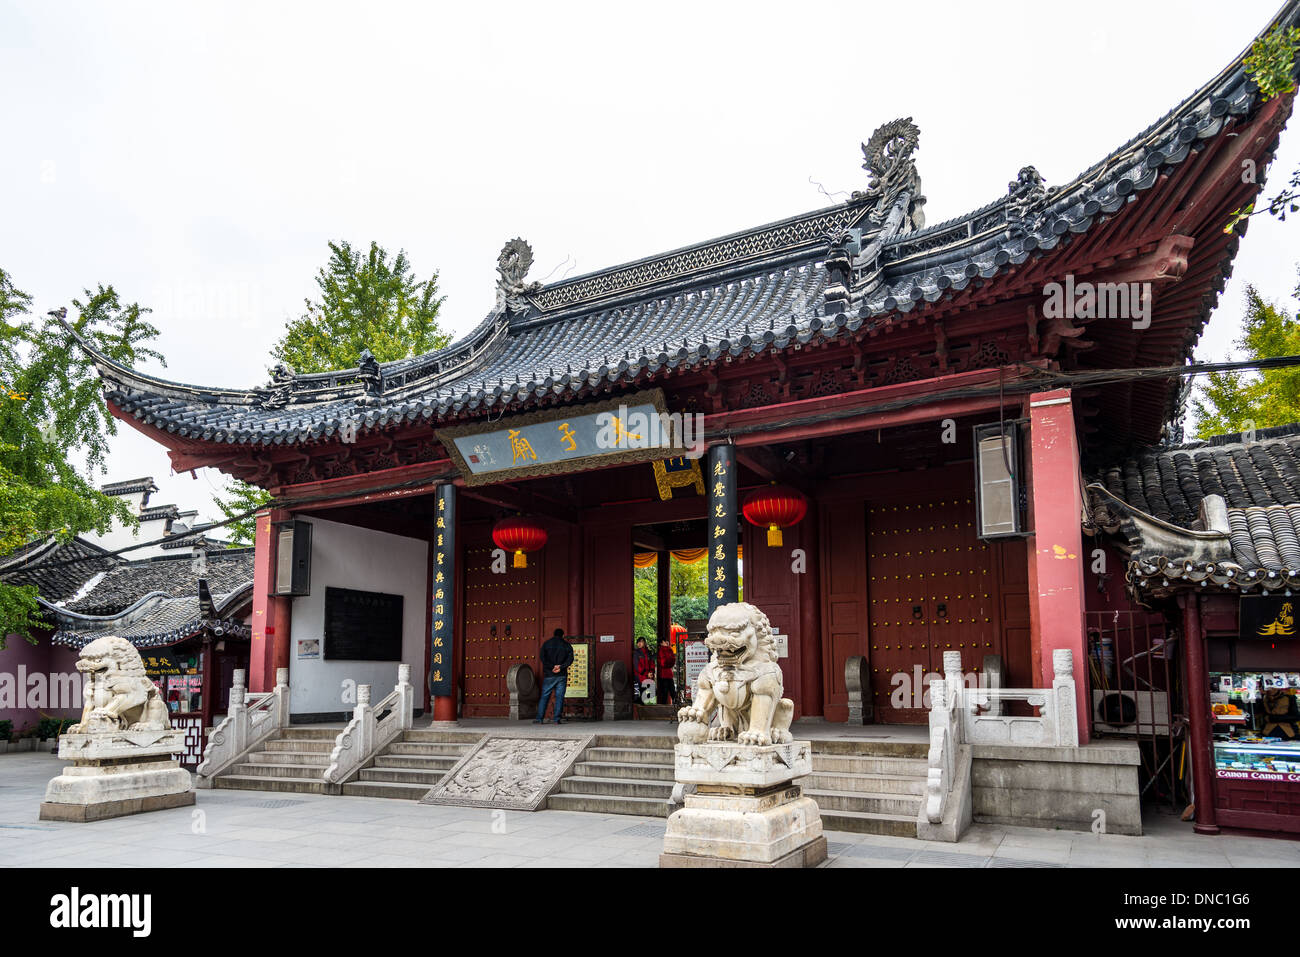 The historical Temple of Confucius at Nanjing, Jiansu Province, China. Stock Photo